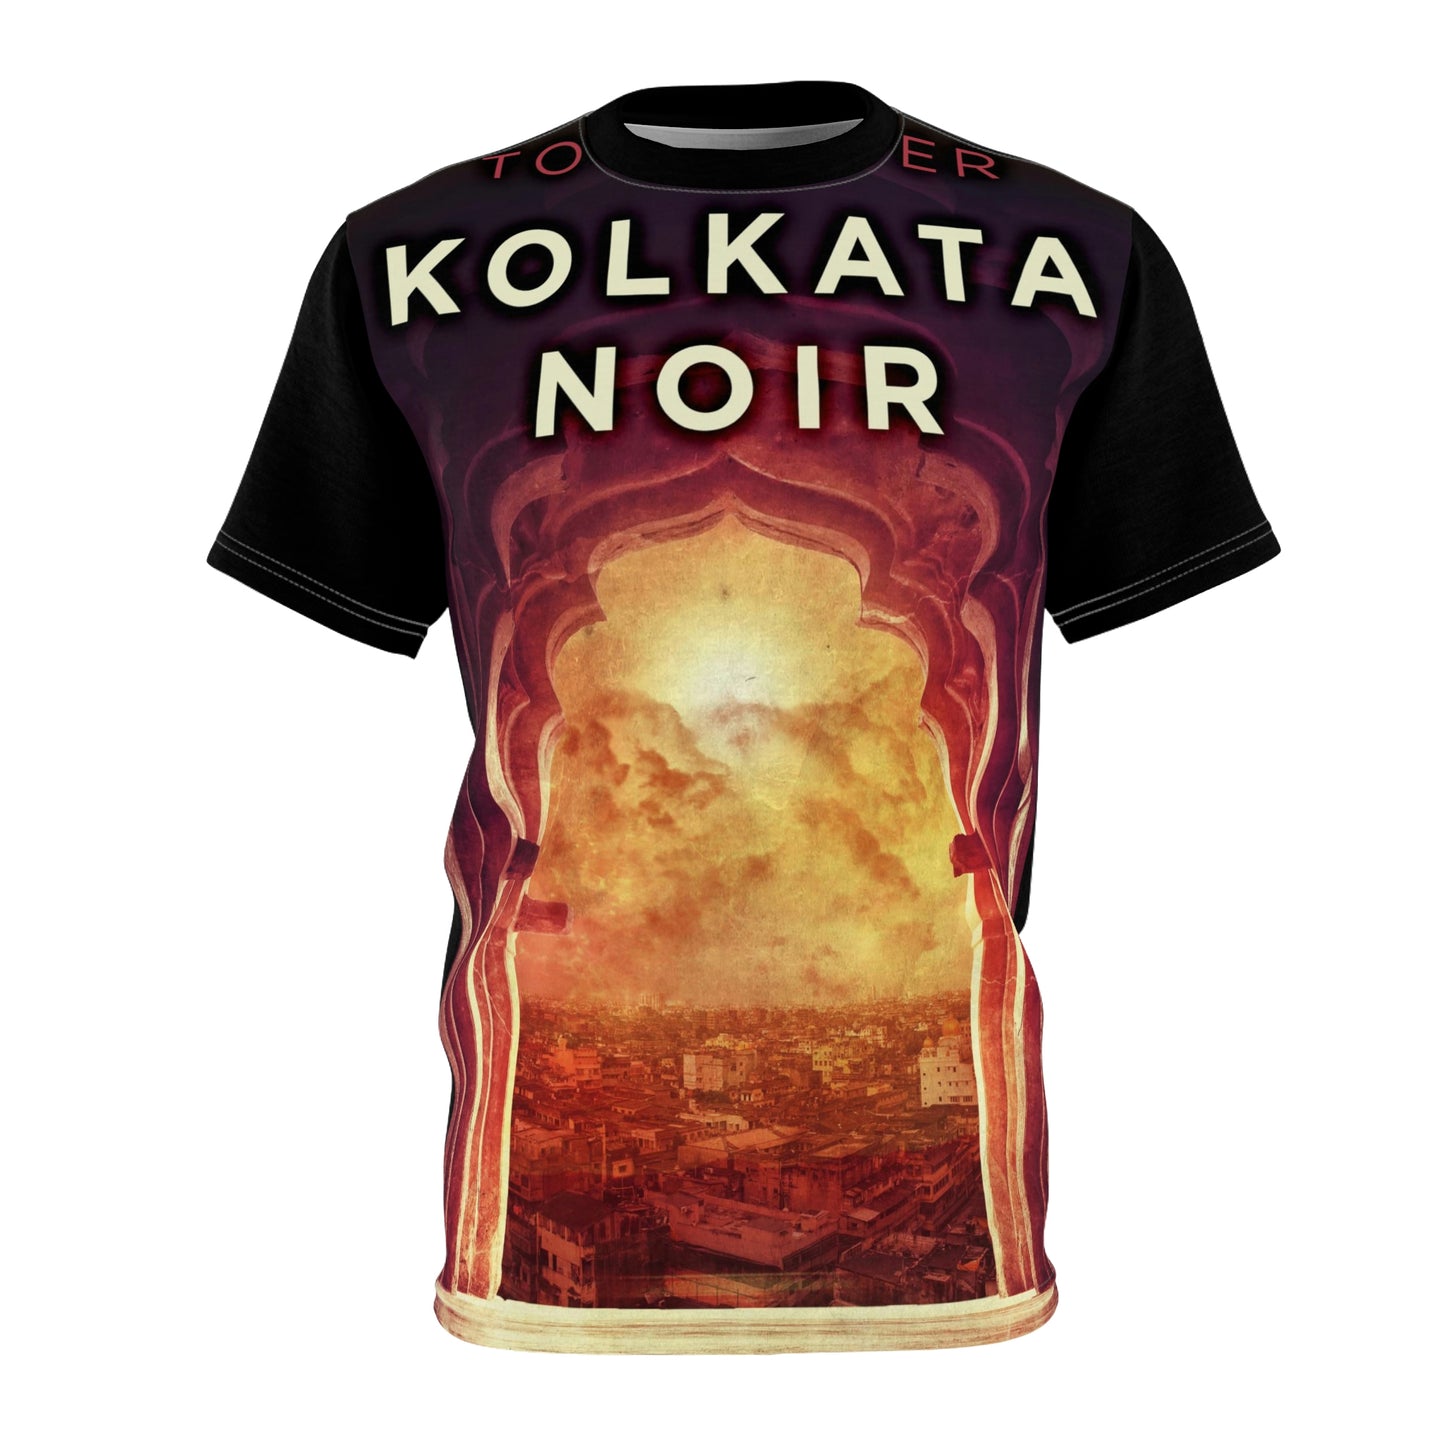 Kolkata Noir - Unisex All-Over Print Cut & Sew T-Shirt